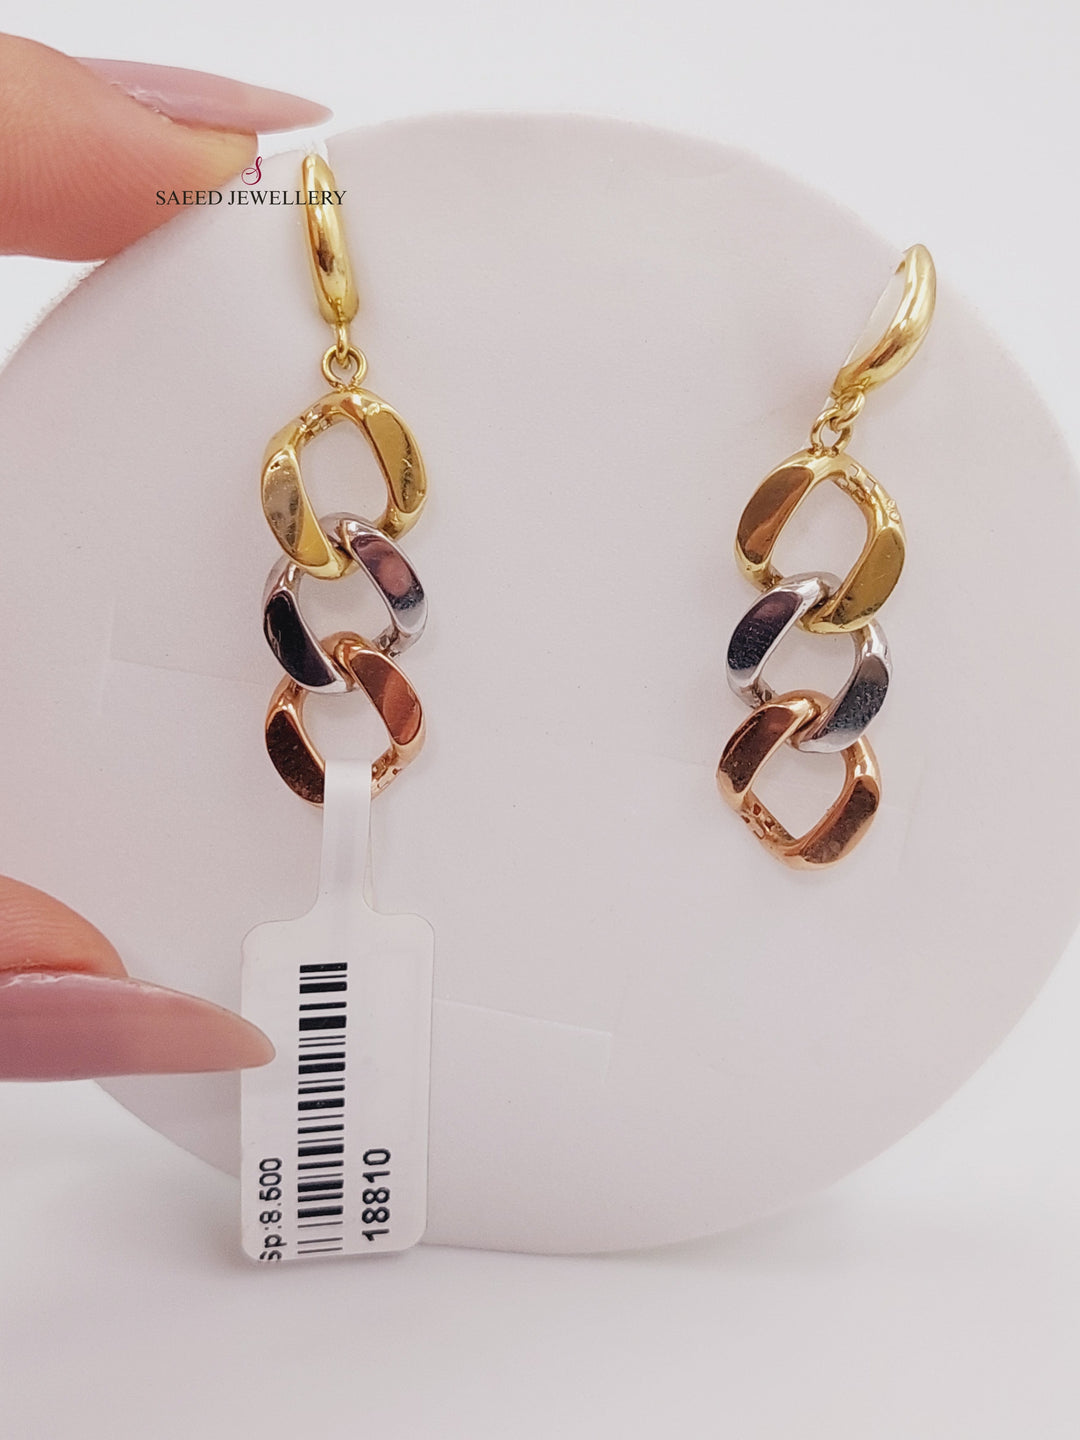 18K Gold Fancy Earrings by Saeed Jewelry - Image 1